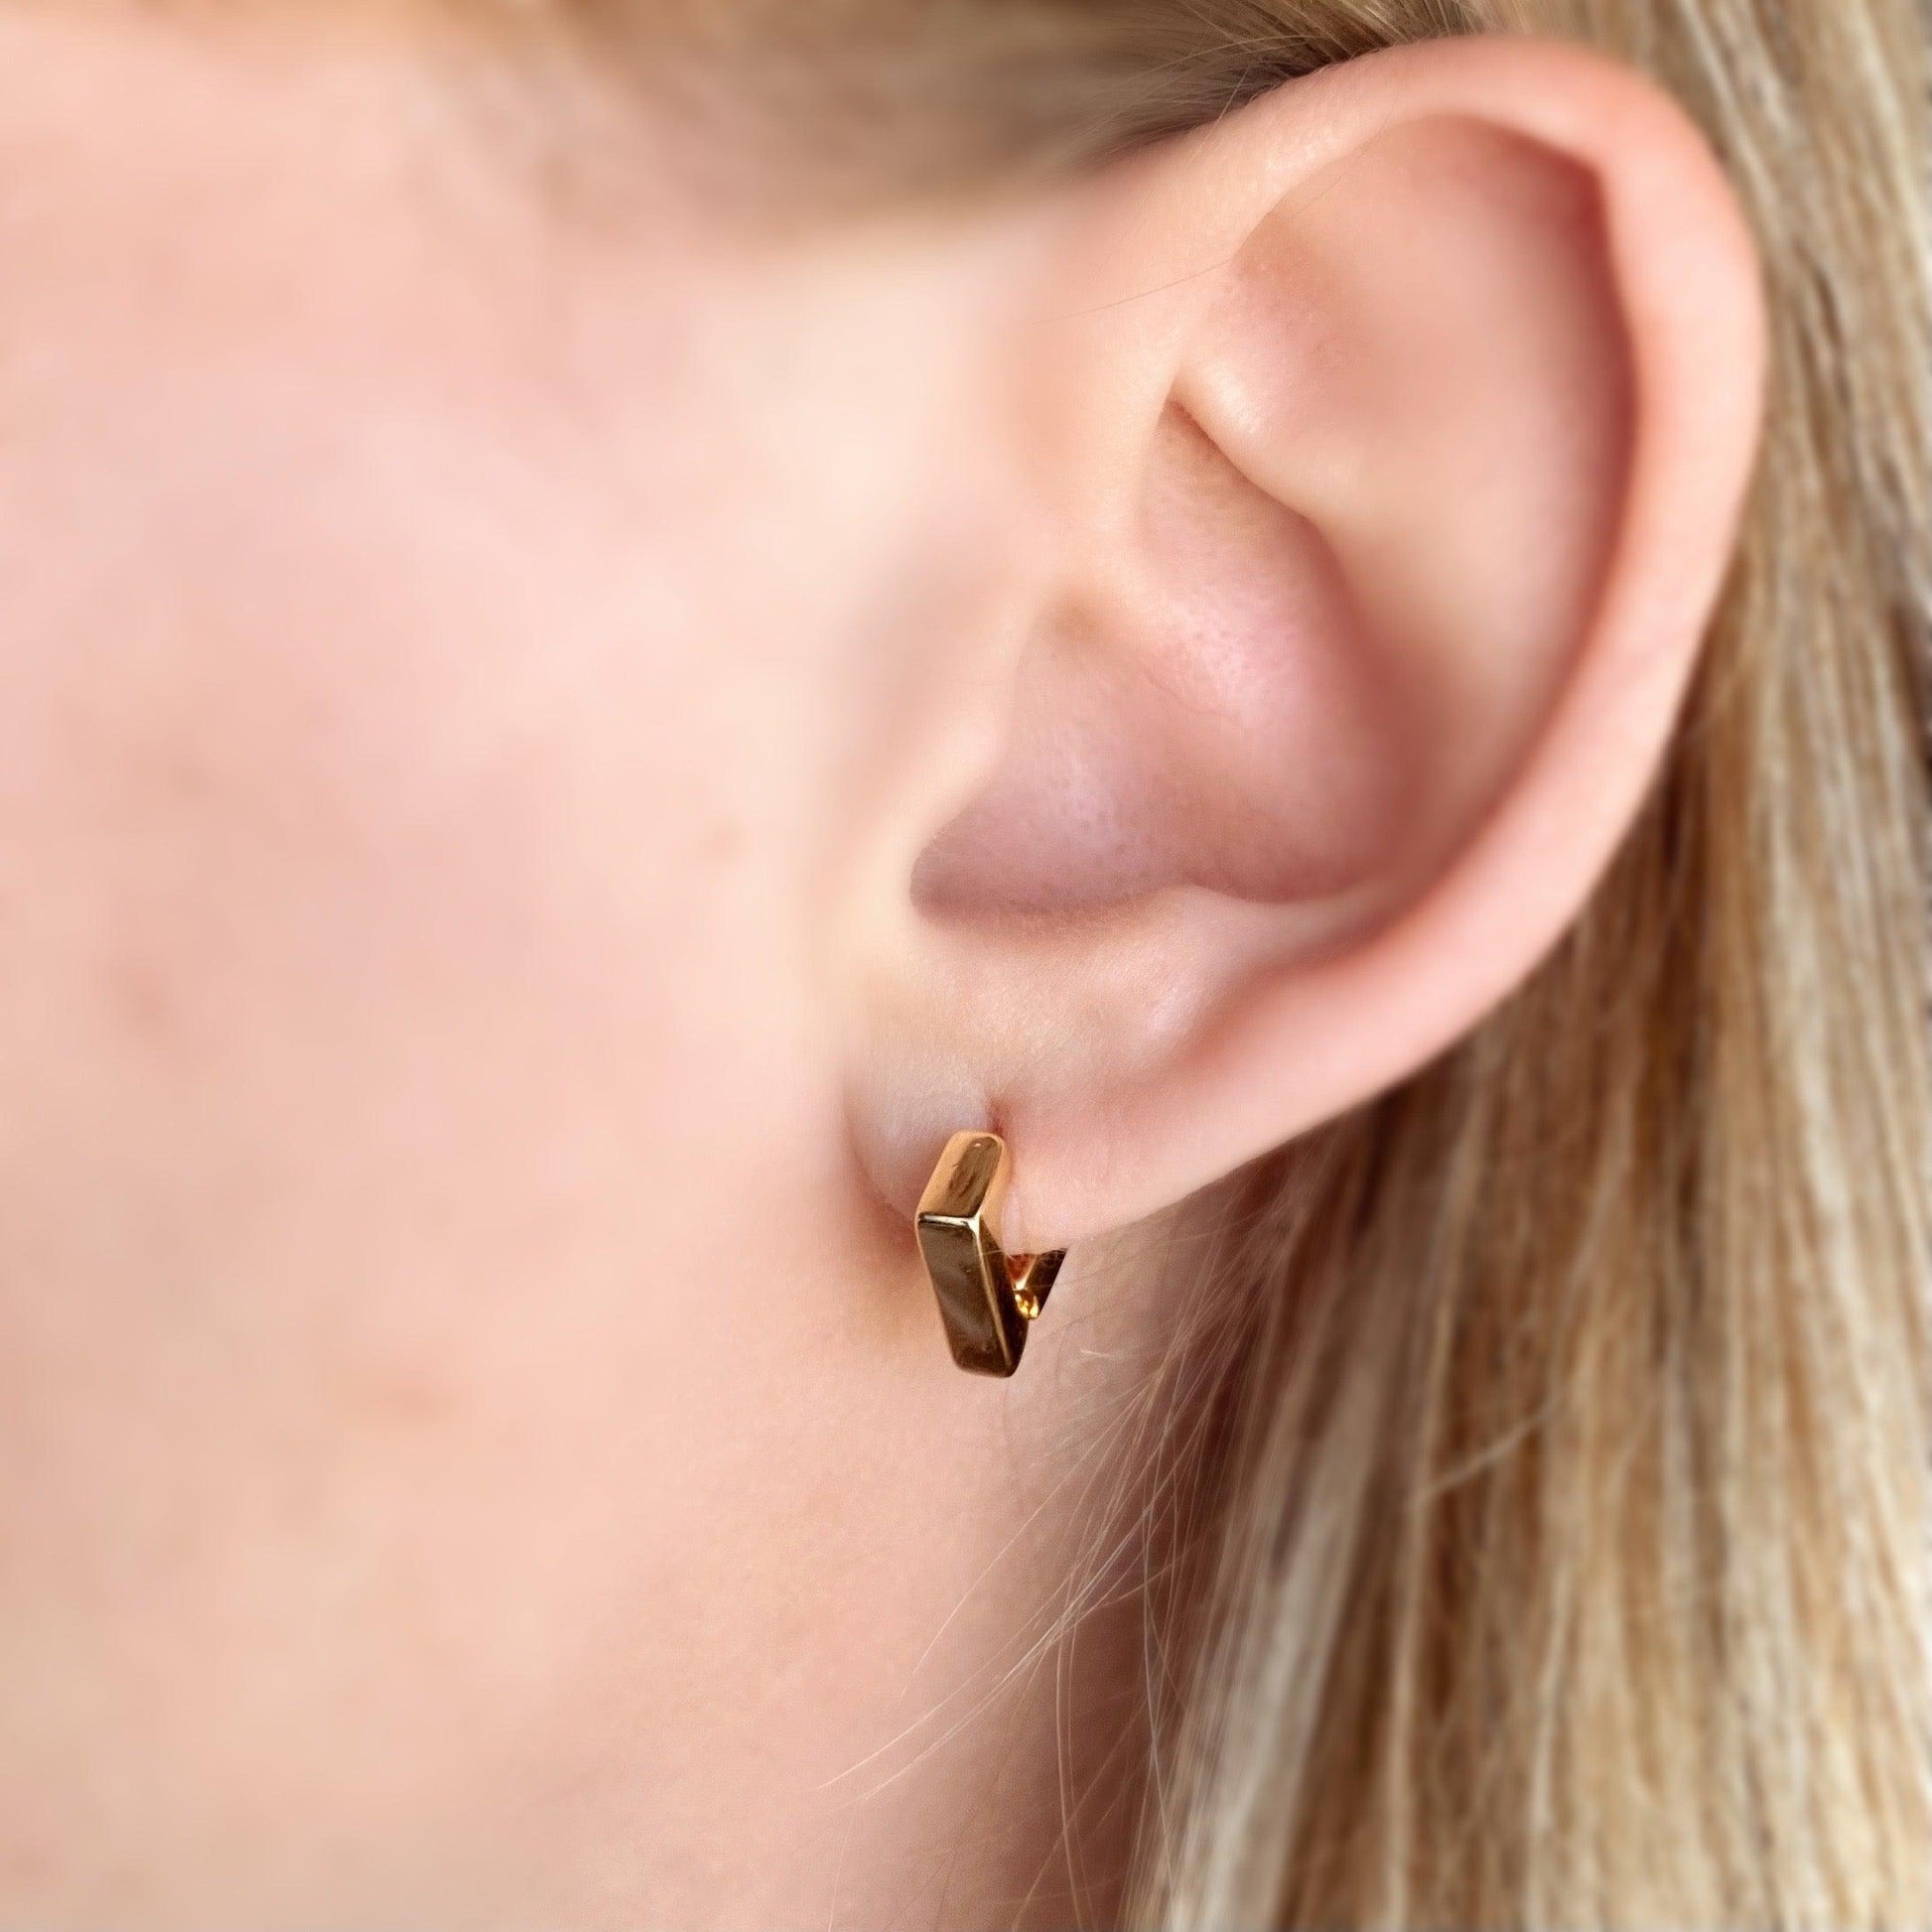 GoldFi 18k Gold Filled Diamond Shaped Clicker Earrings